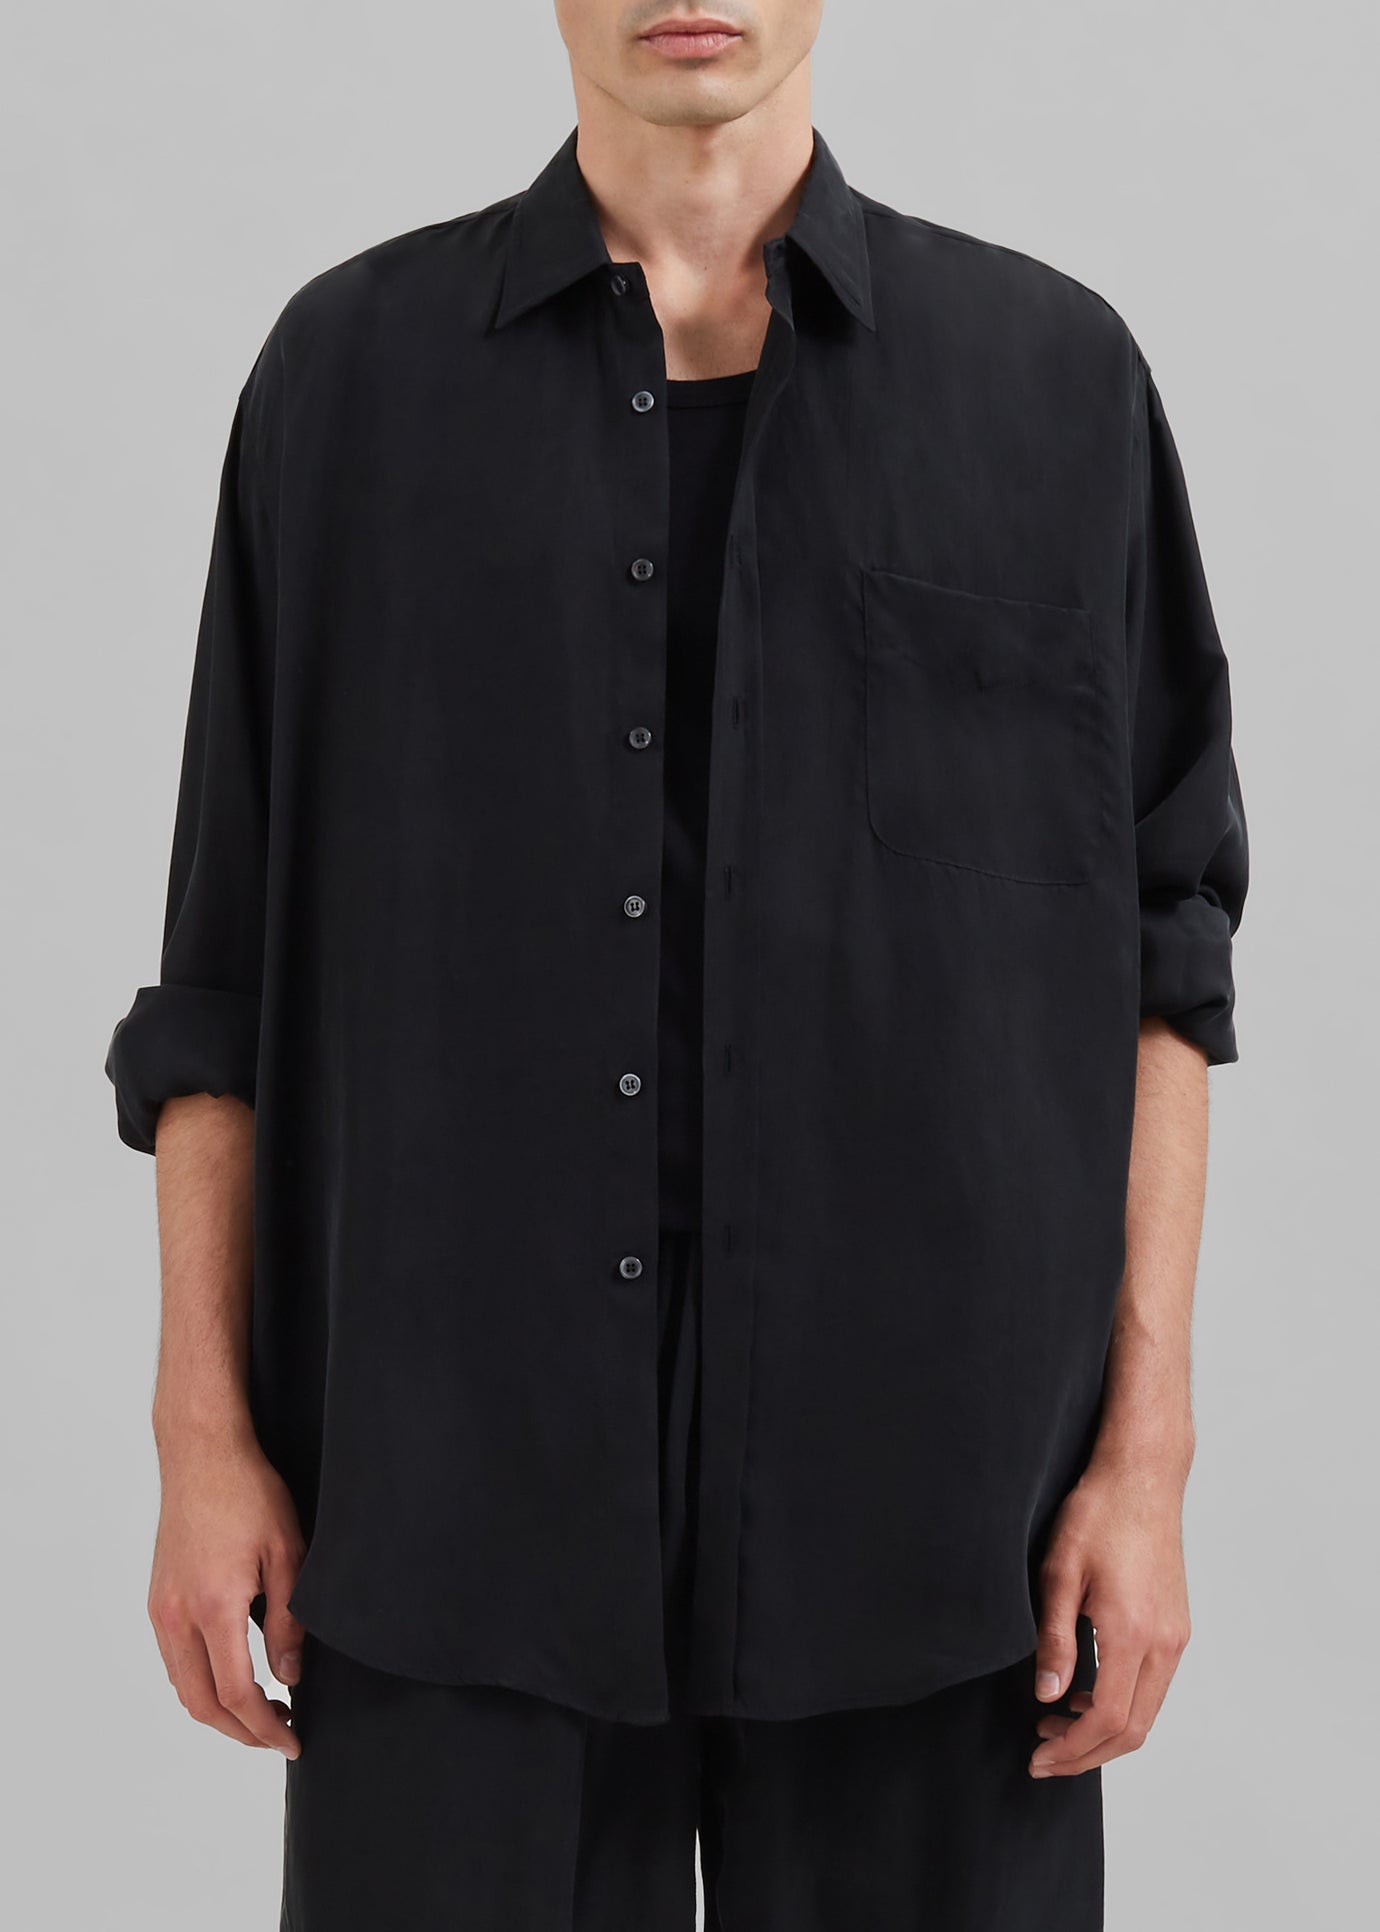 Leland Silky Shirt - Black - 1